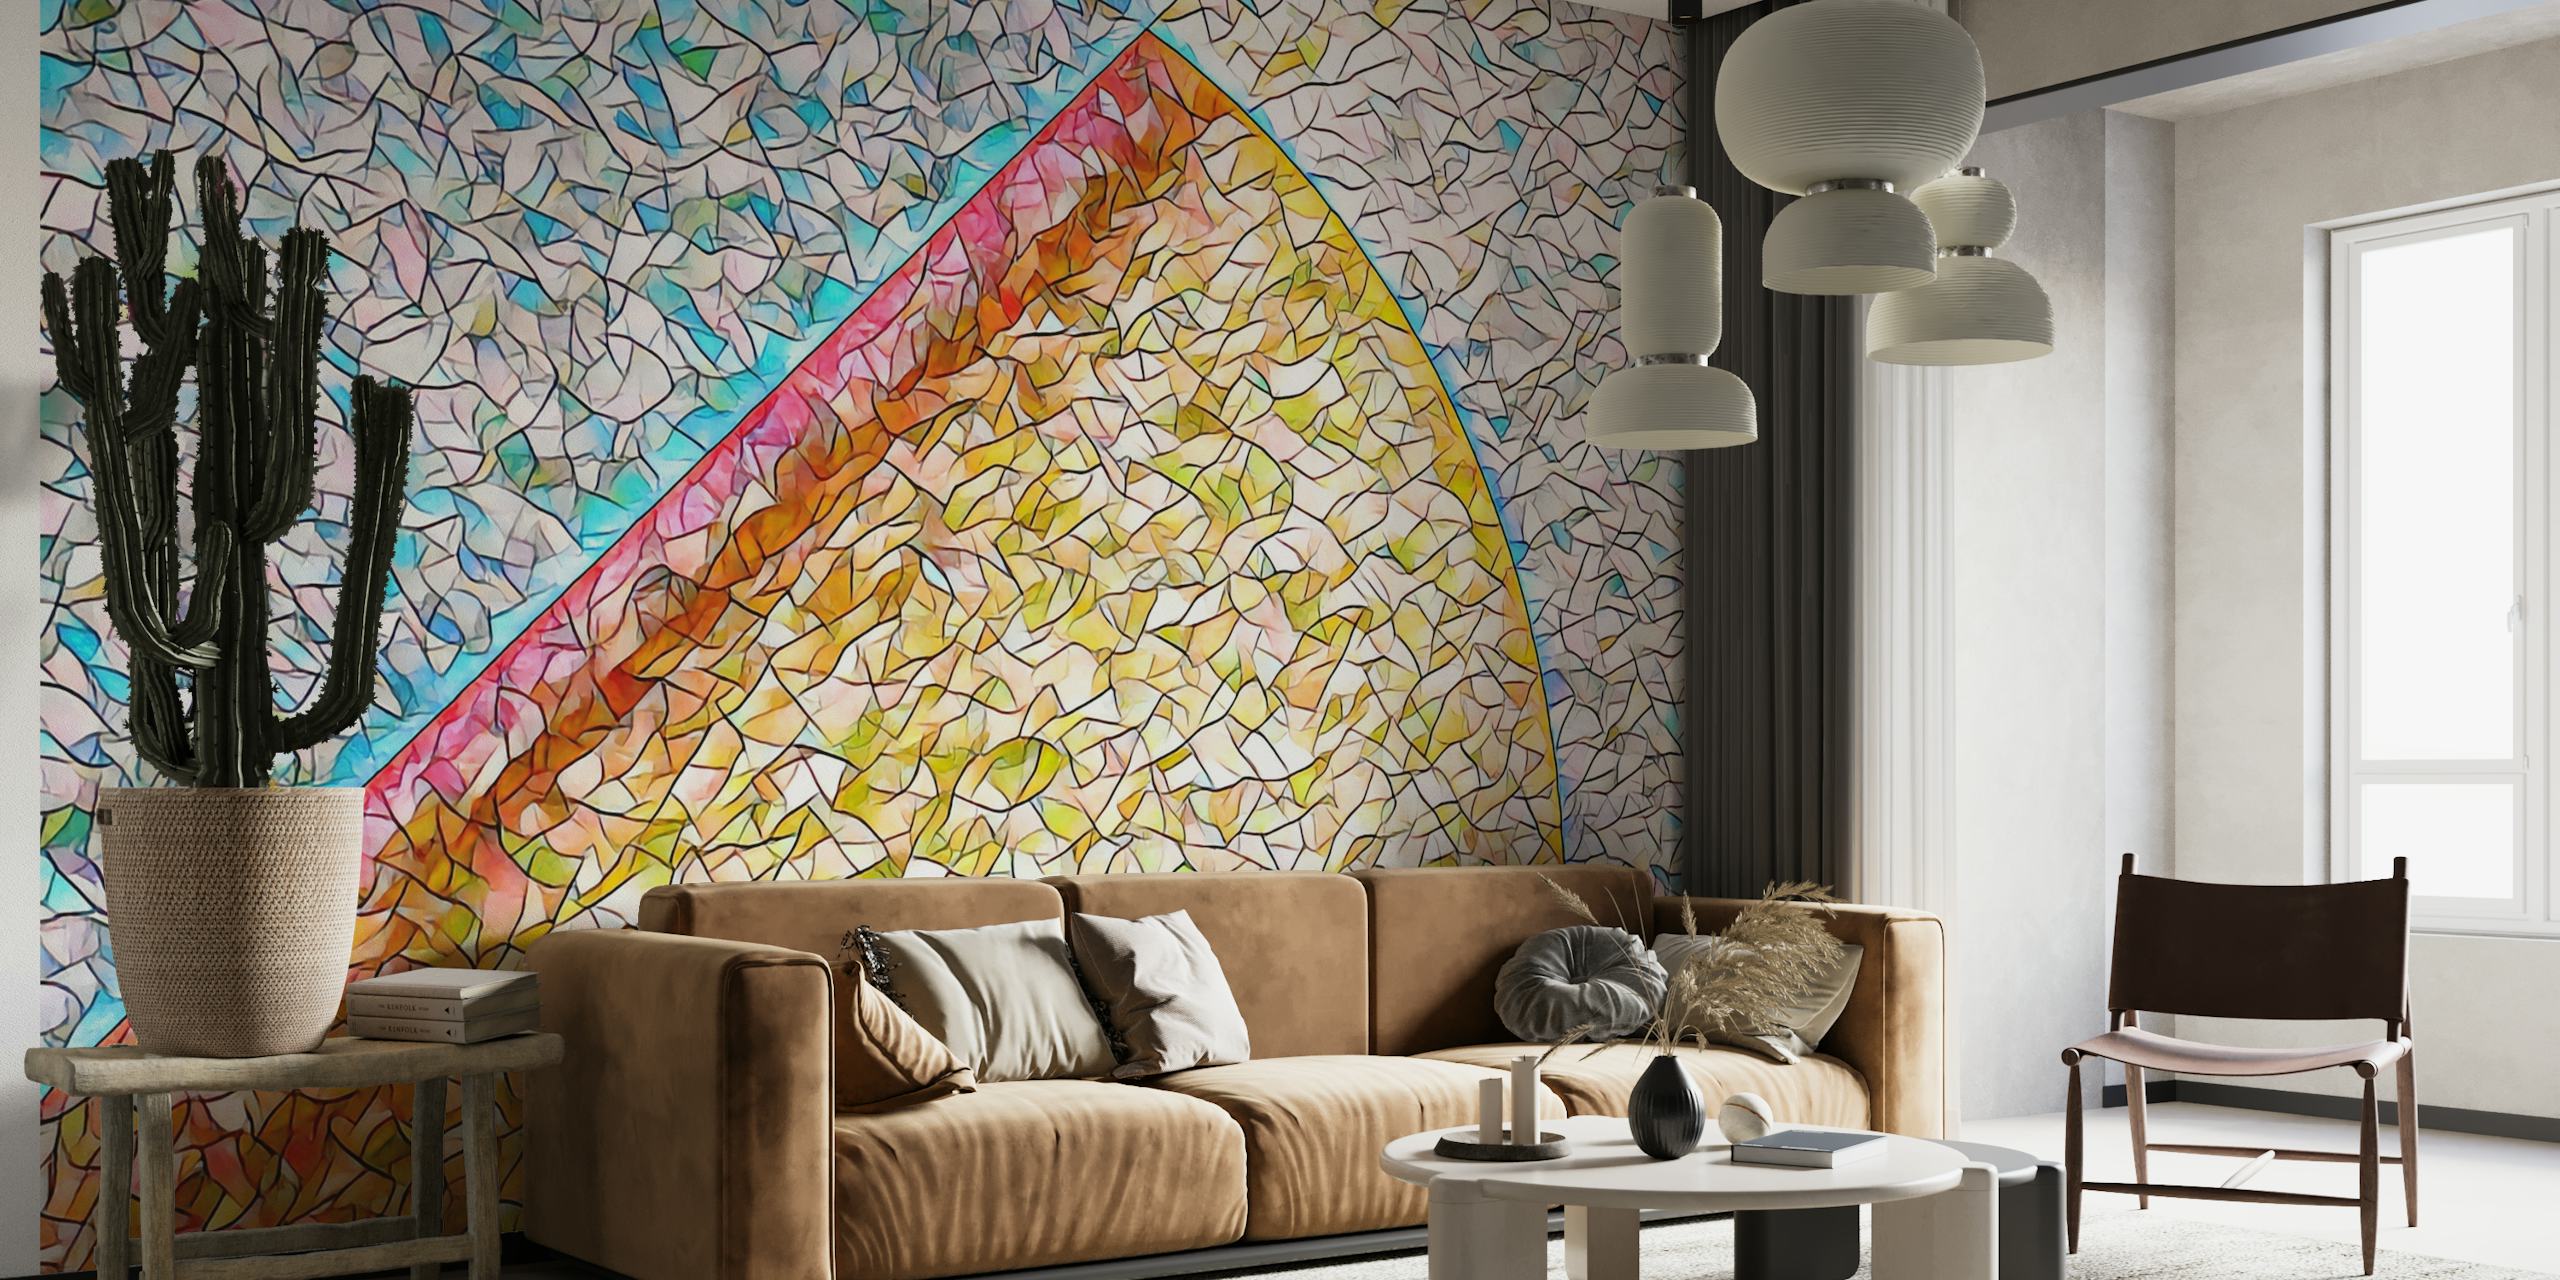 Fototapete mit pastellfarbenem geometrischem mosaikmuster